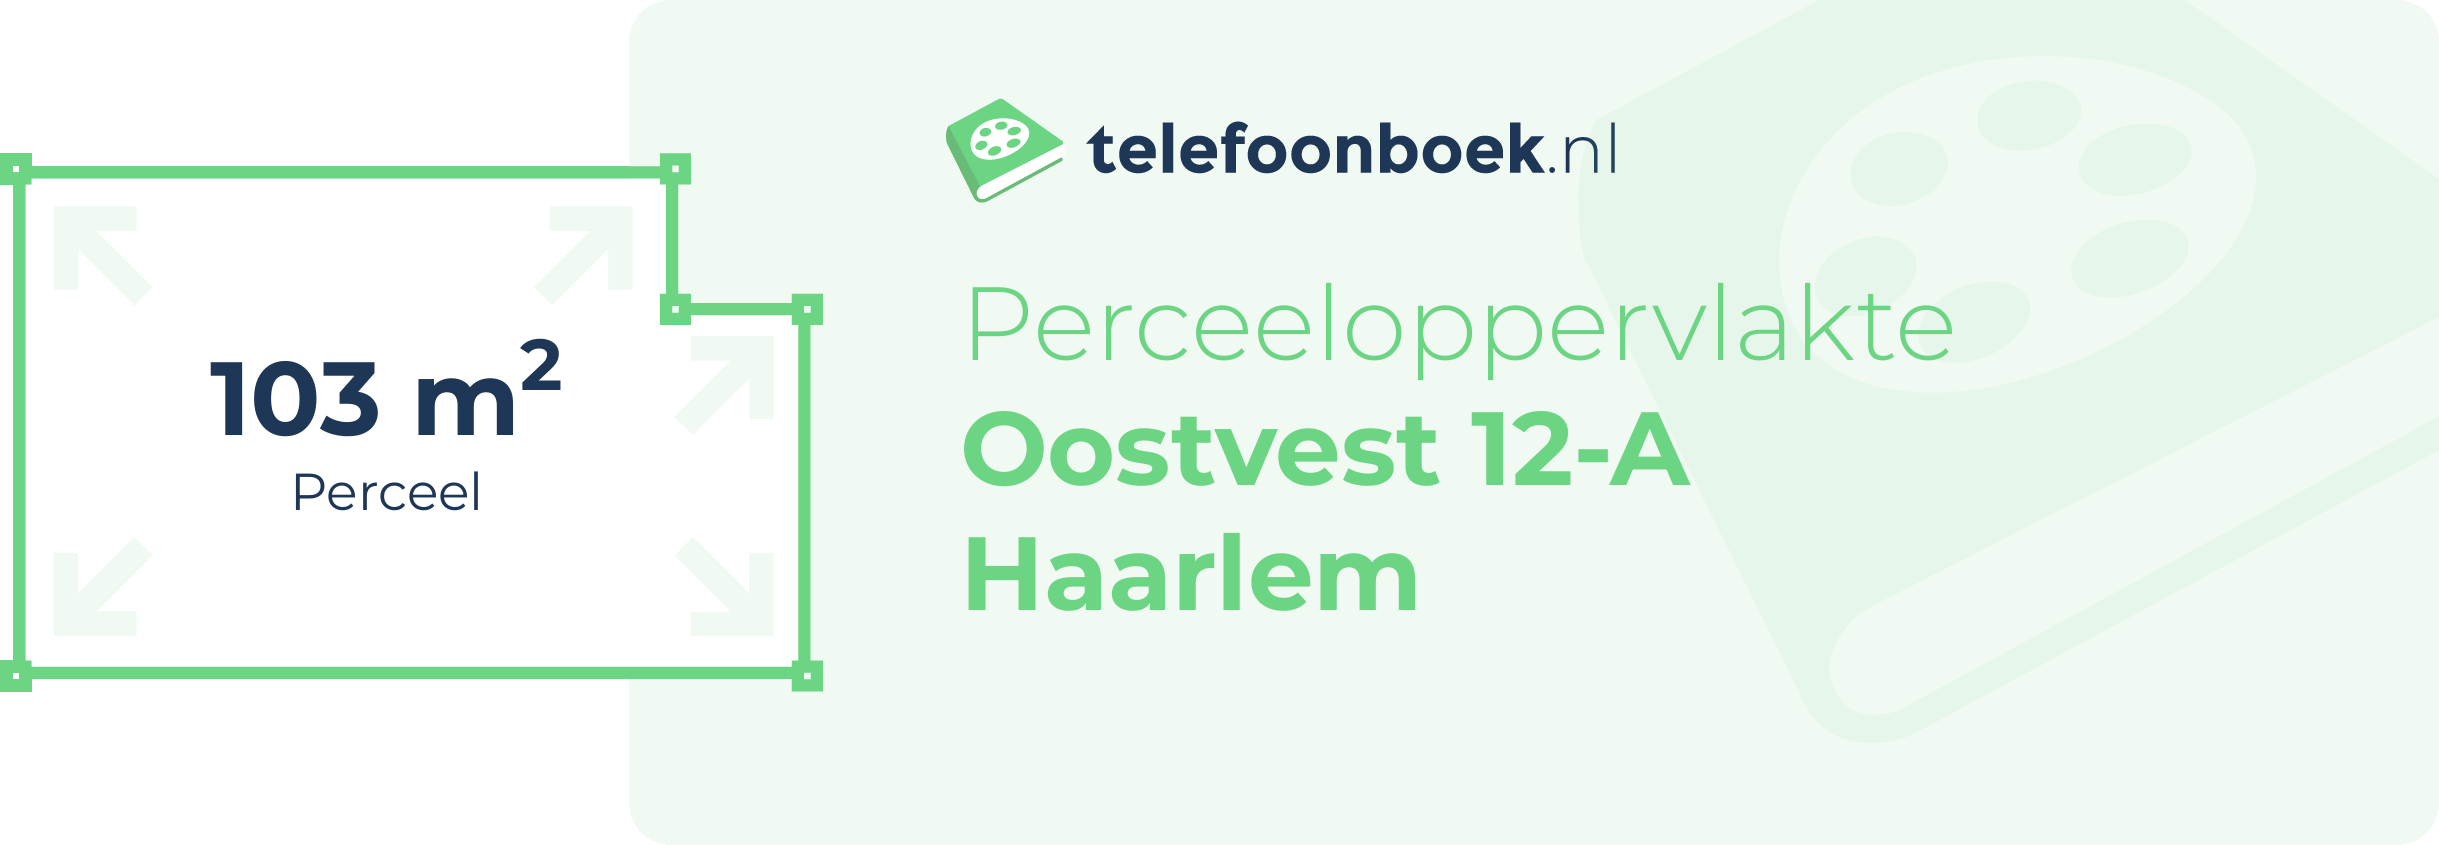 Perceeloppervlakte Oostvest 12-A Haarlem